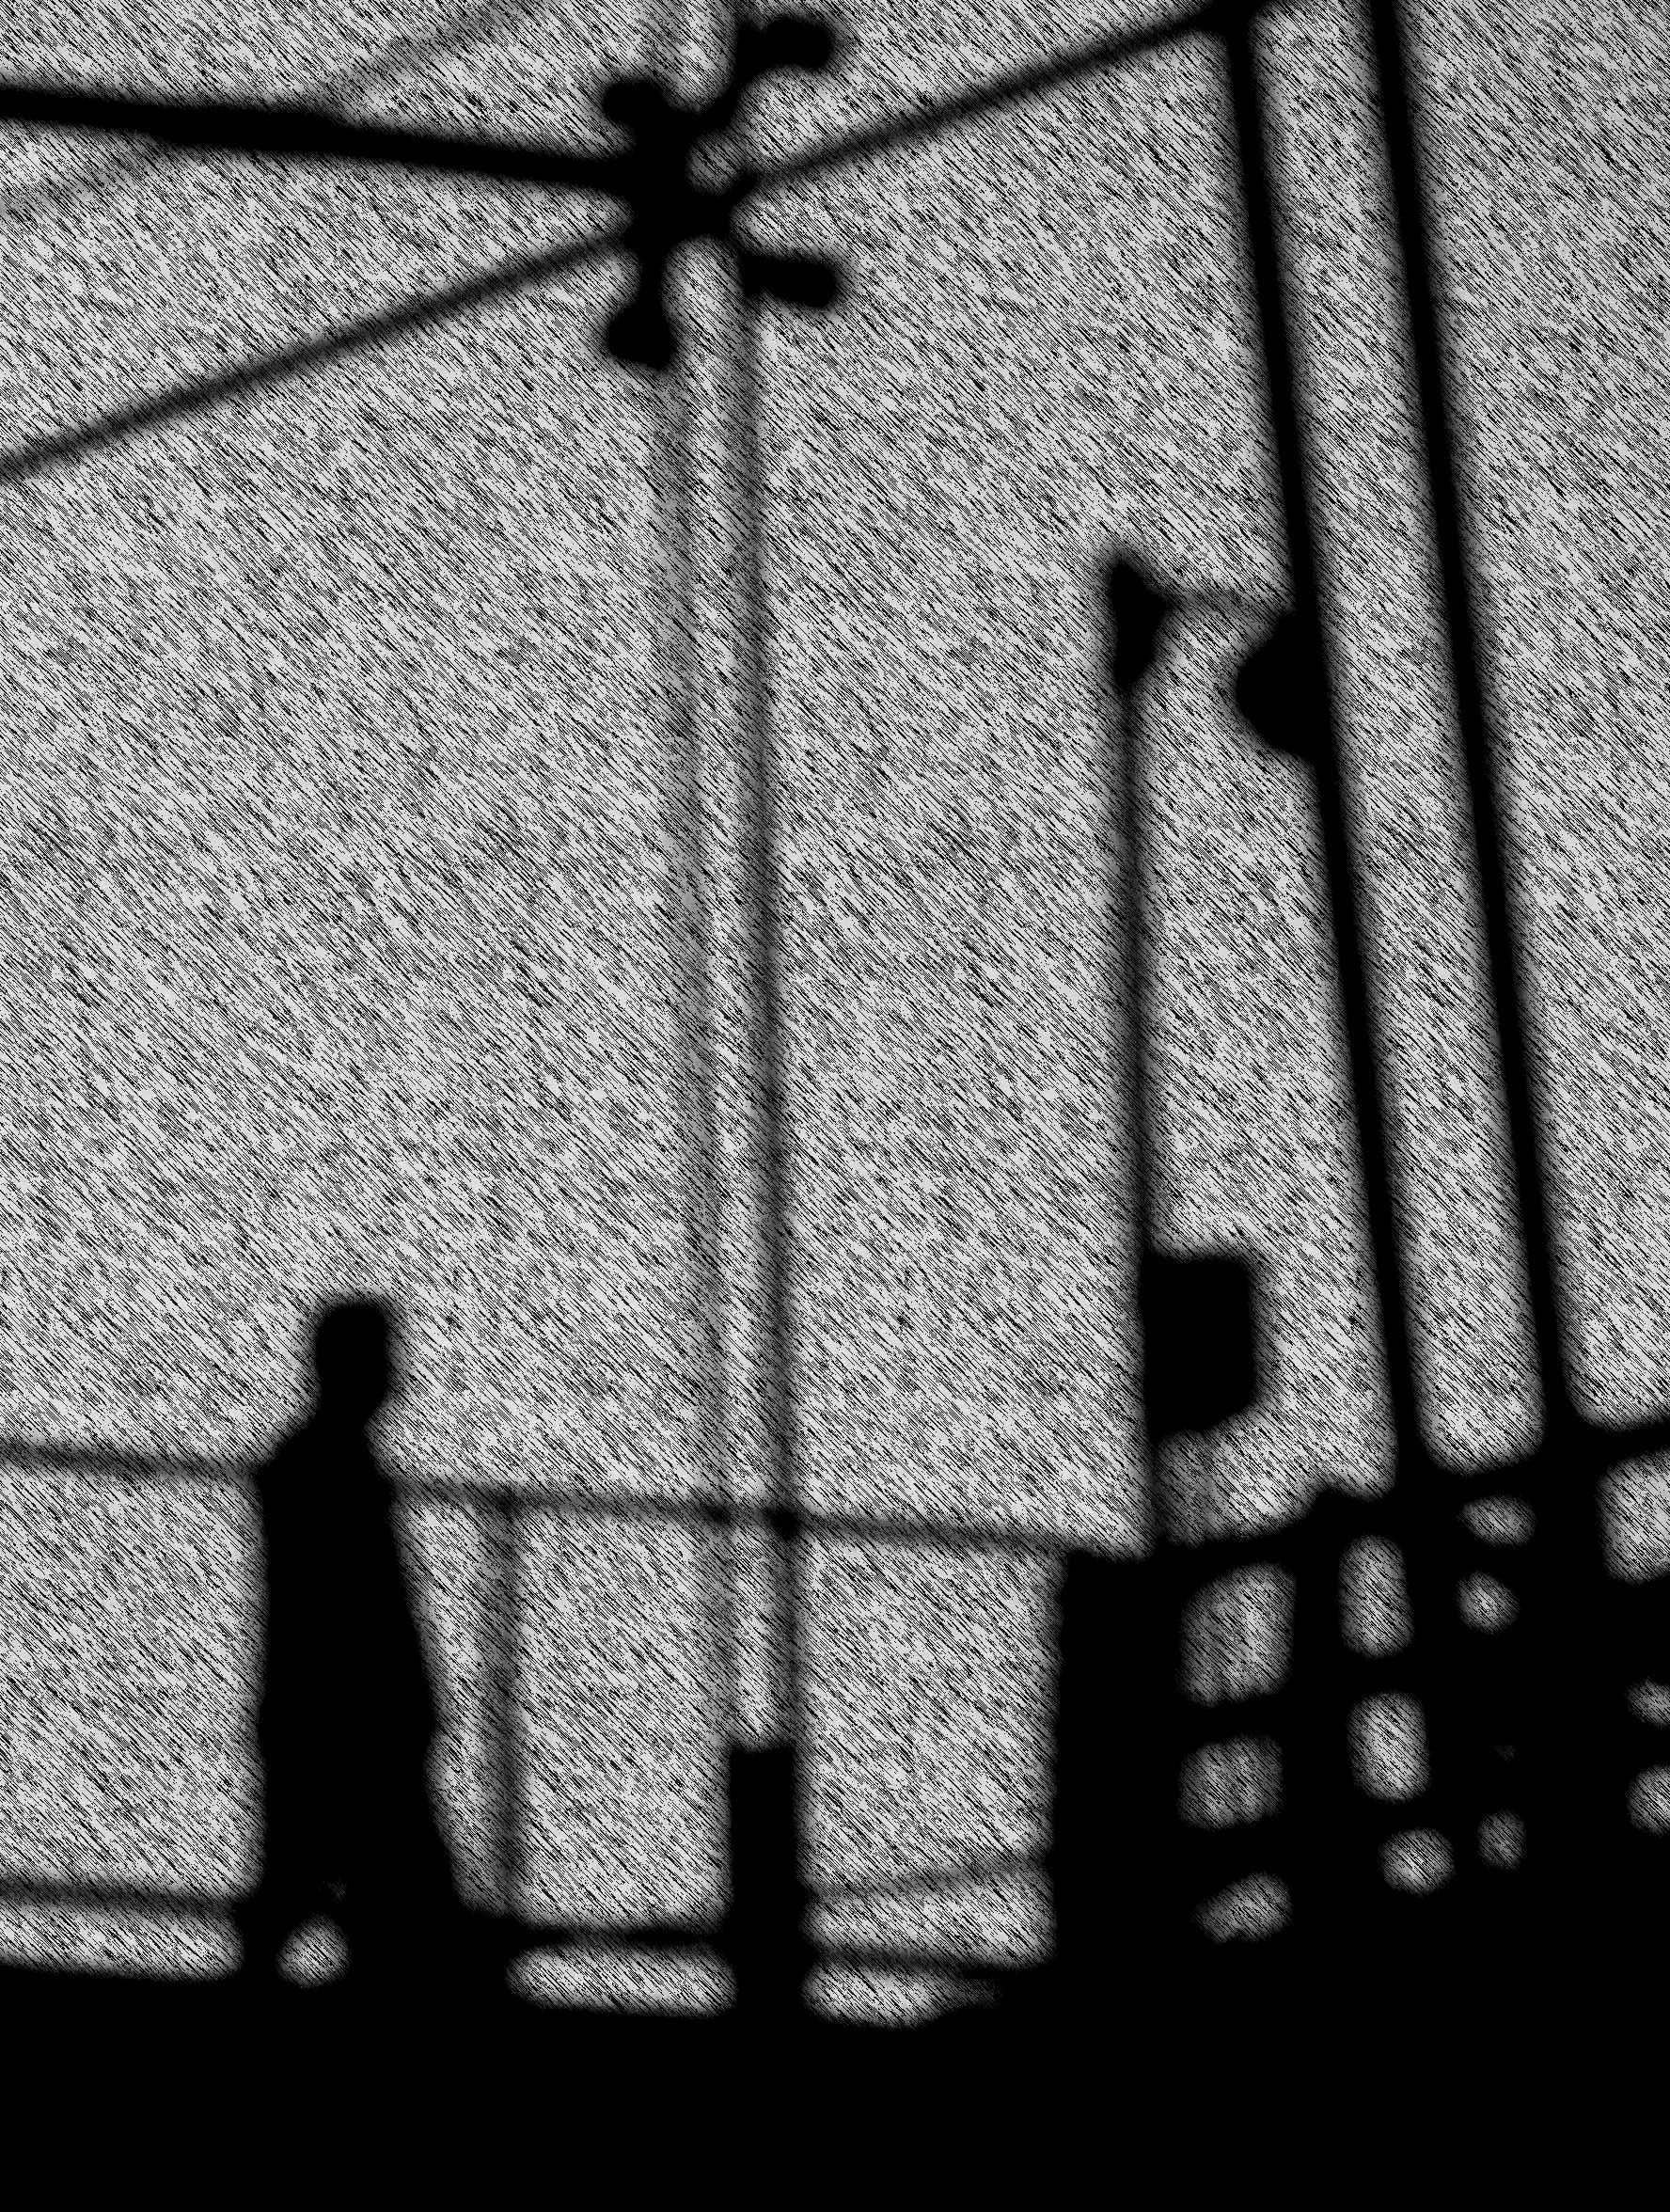 Free photo: Walking man silhouette - Airport, Blackandwhite, Business ... Silhouette Man Walking Tunnel